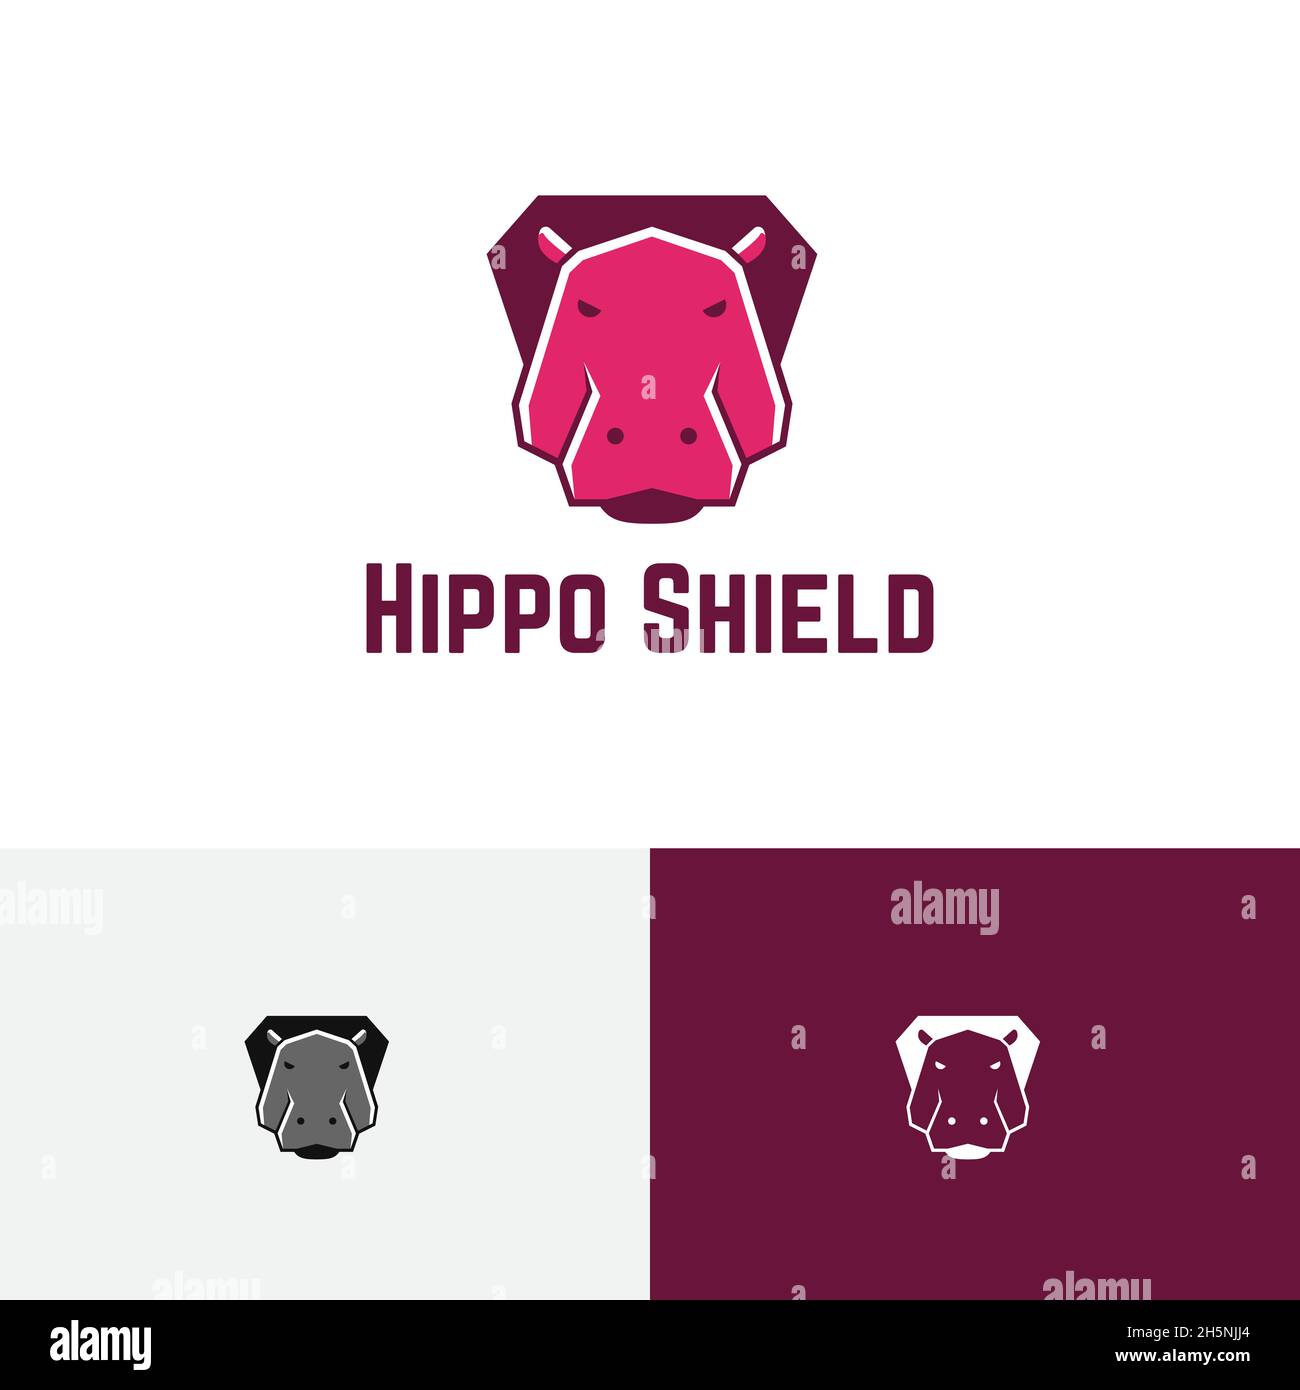 Hippo Shield Strong Protected Animal Game Application Logo Stock Vector